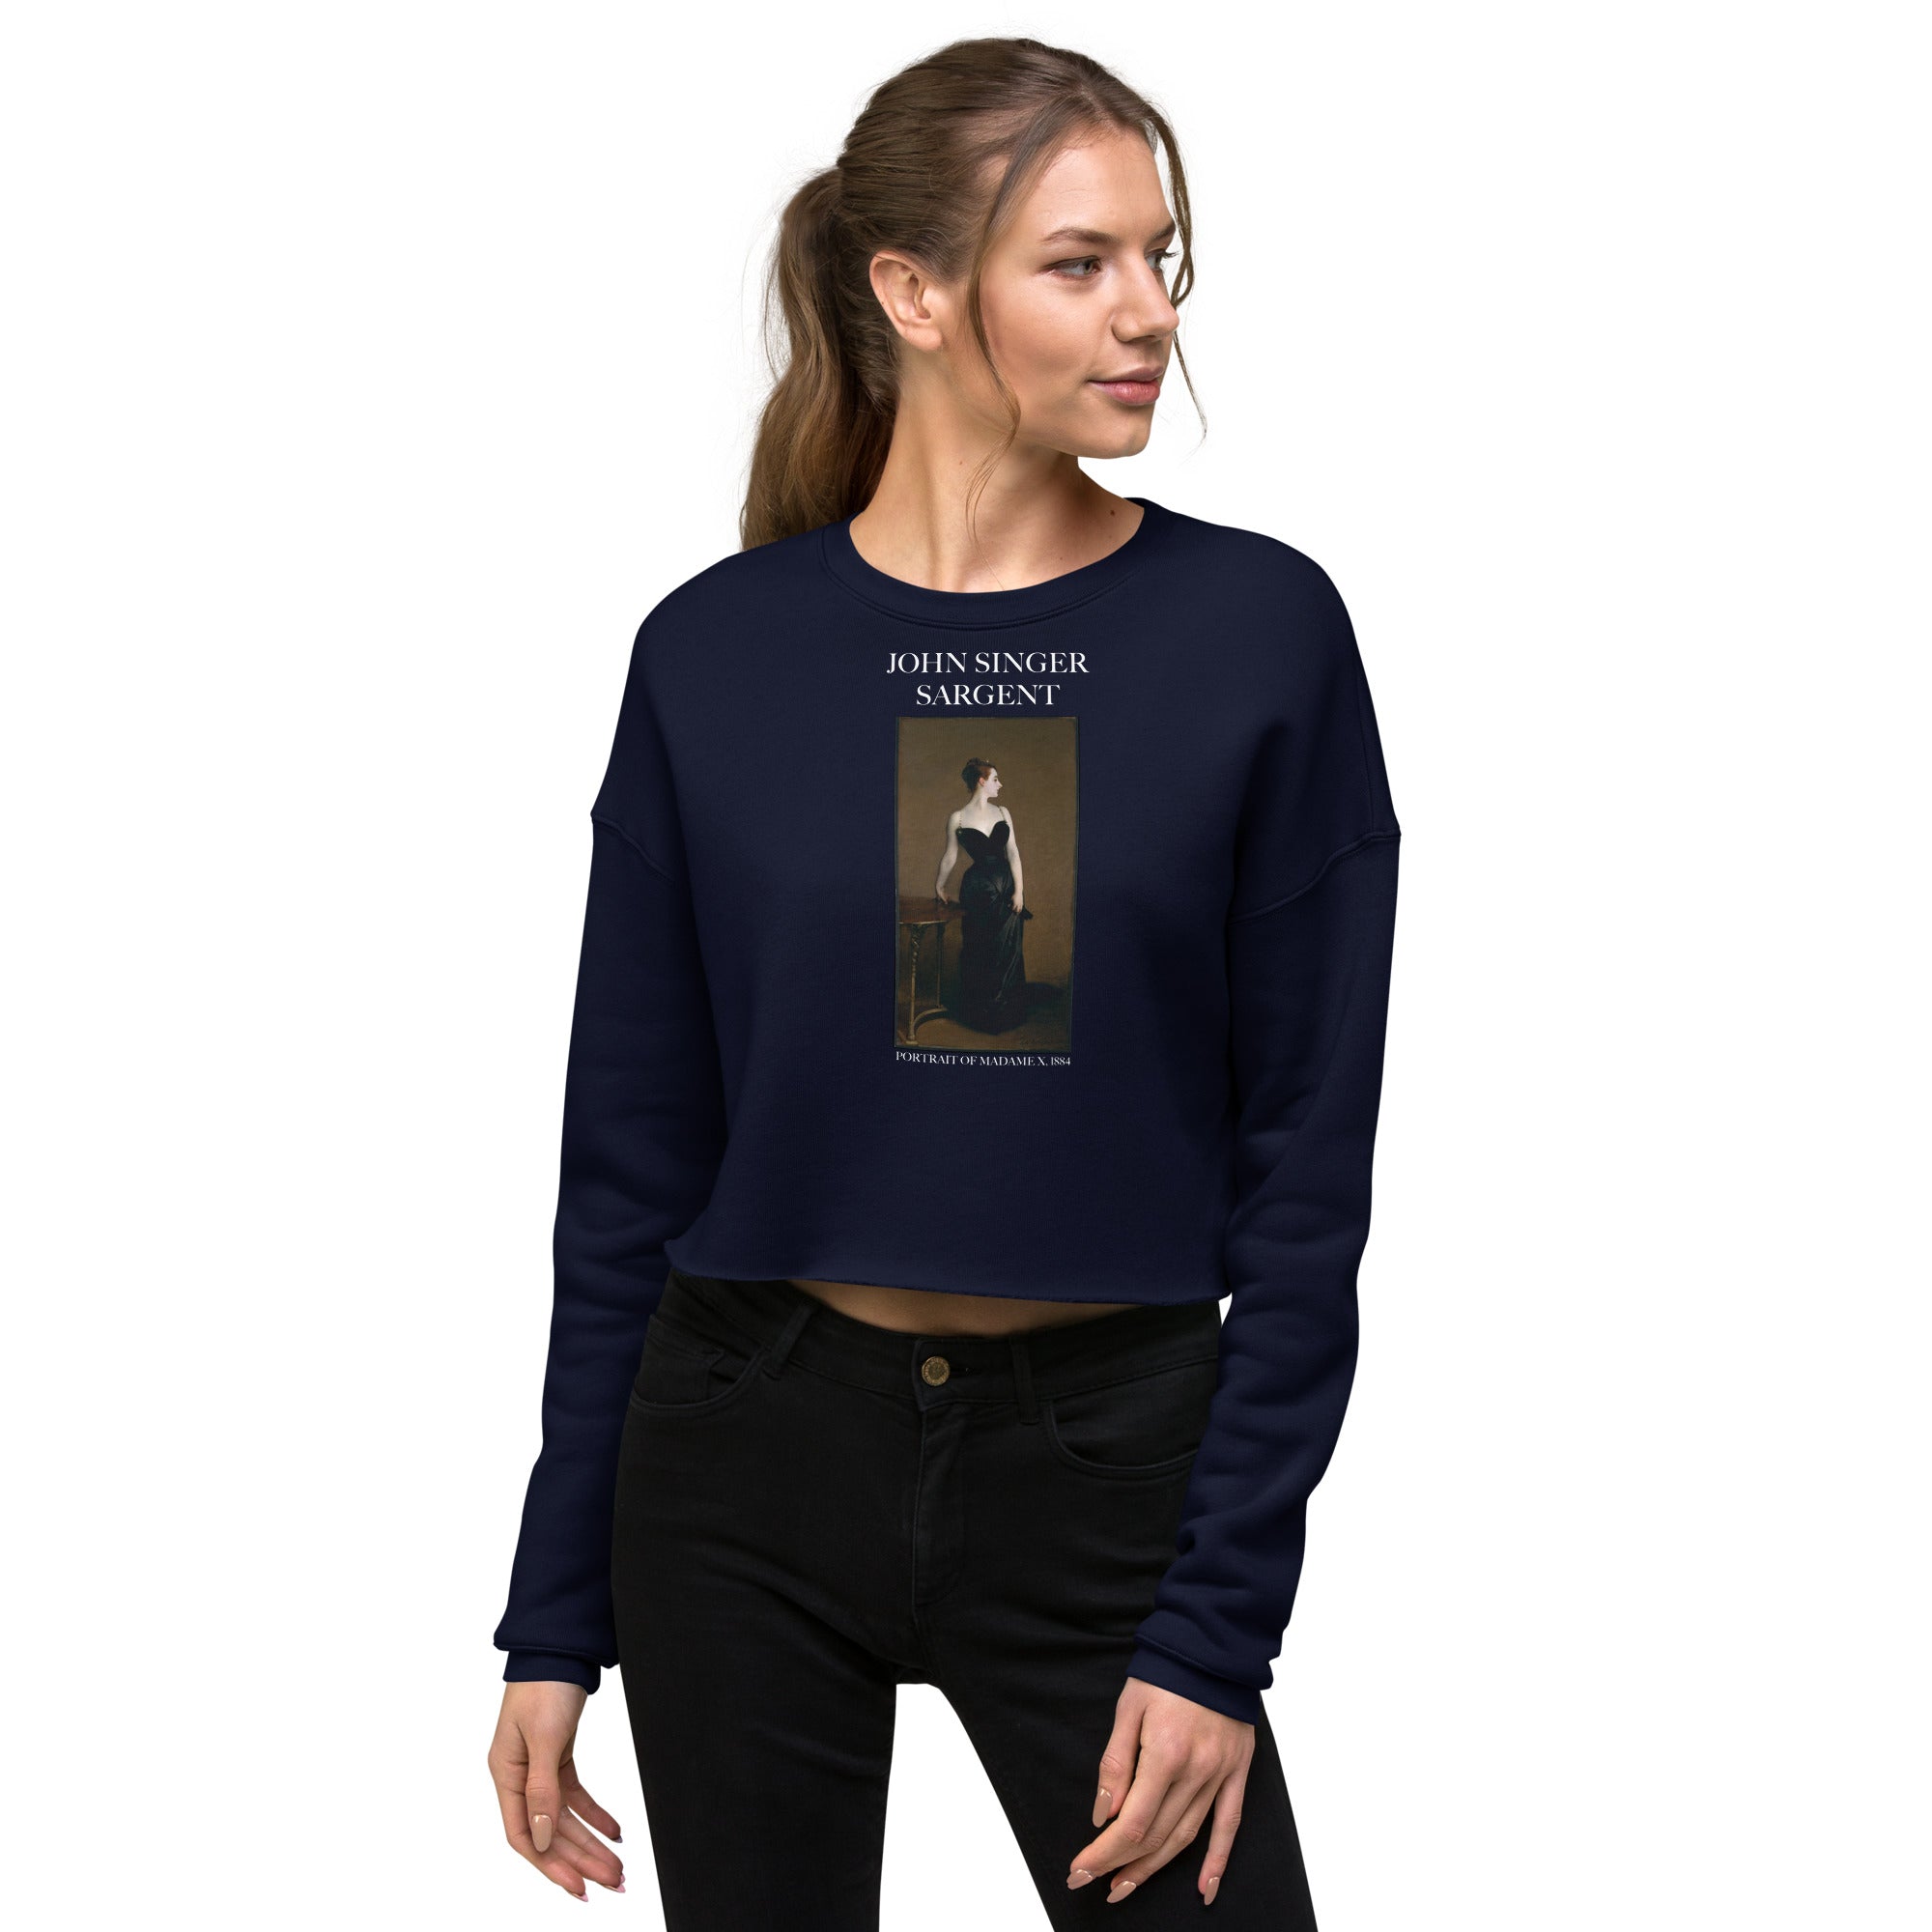 John Singer Sargent 'Portrait of Madame X' Famous Painting Cropped Sweatshirt | Premium Art Cropped Sweatshirt